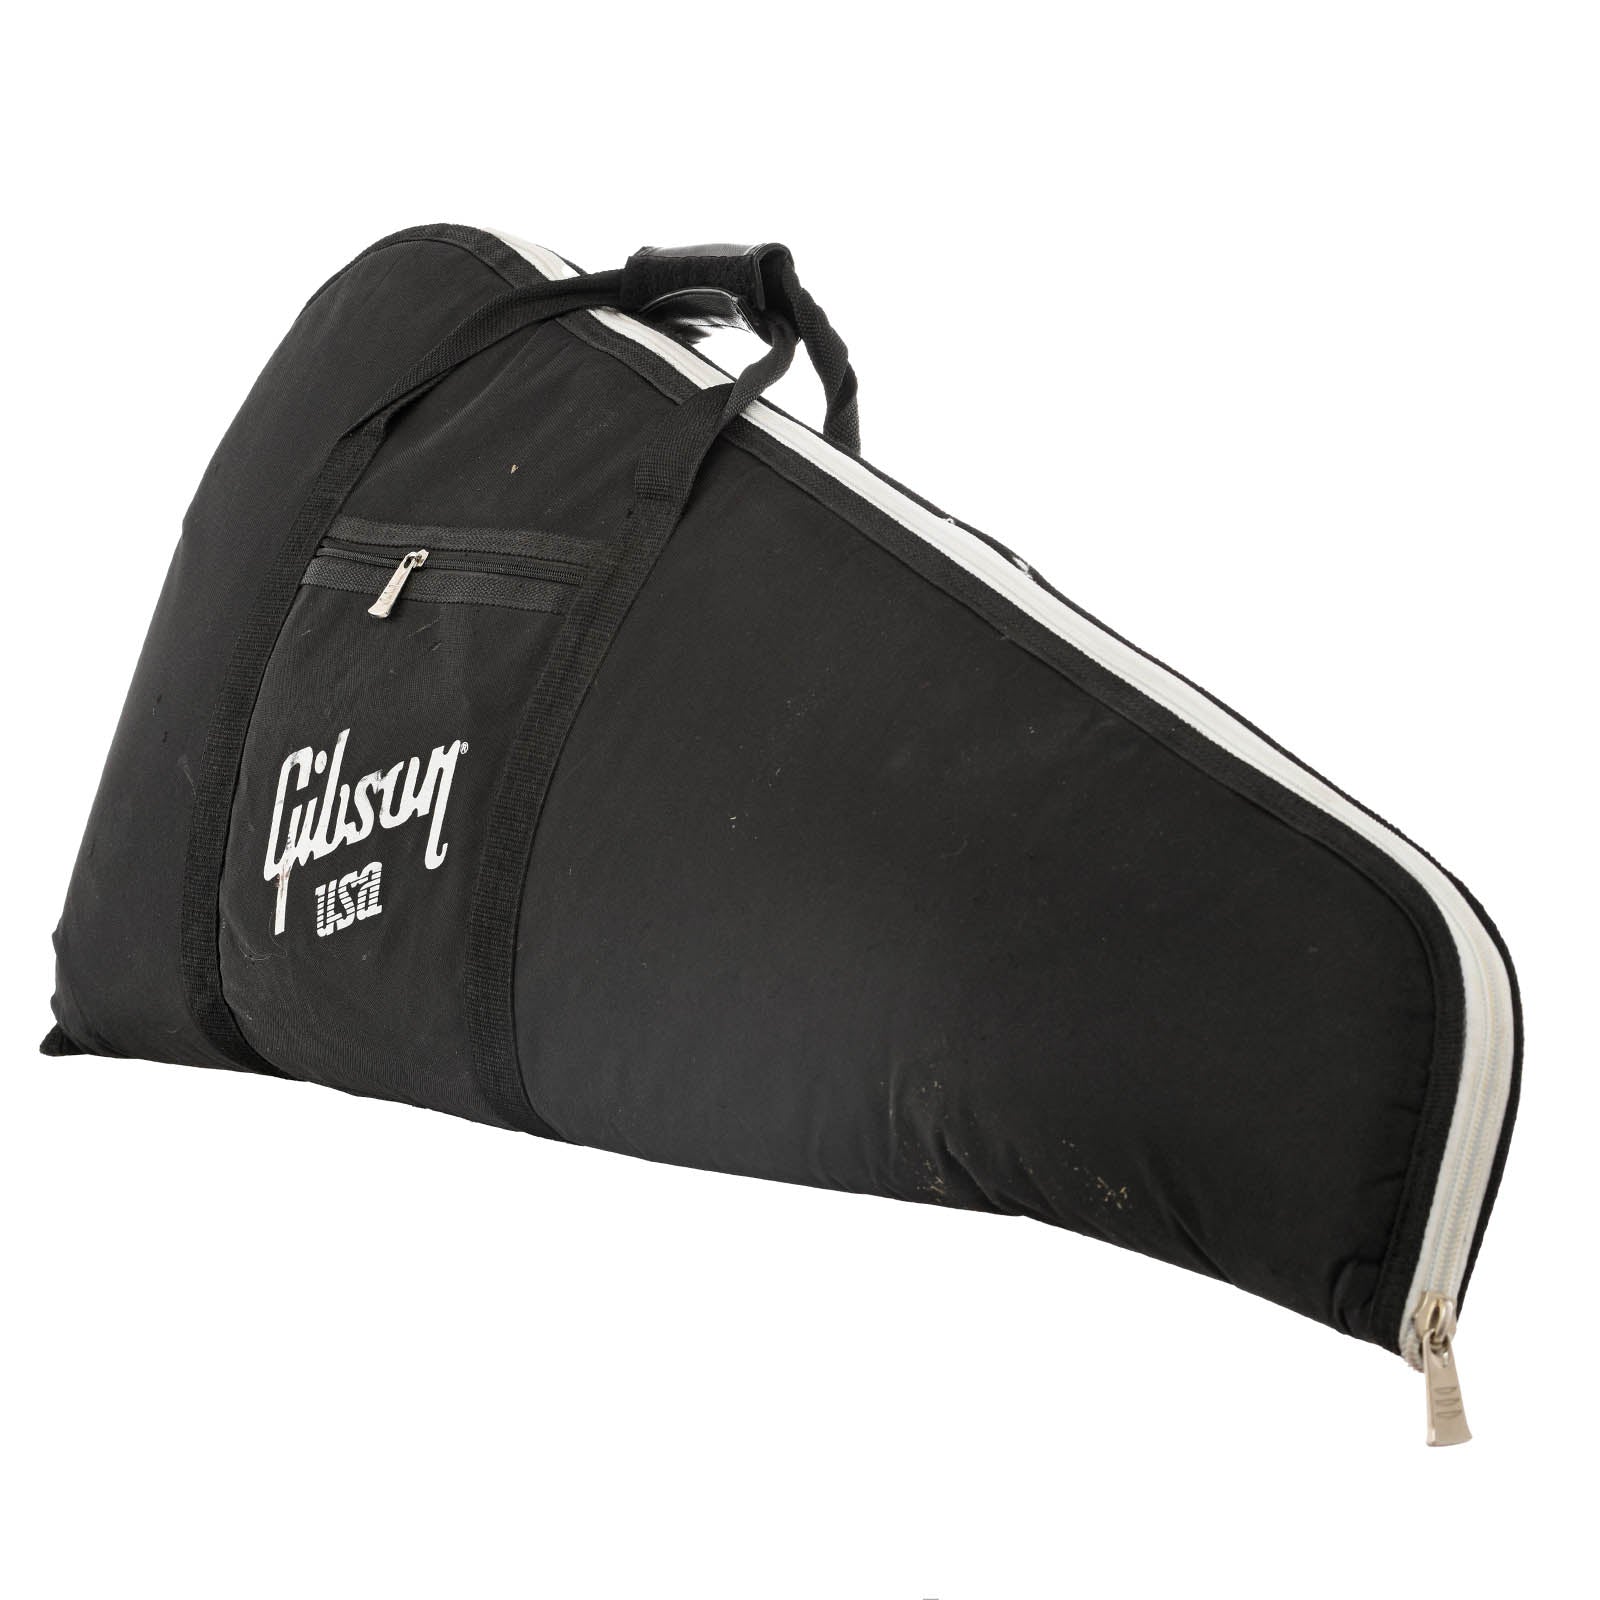 Gig bag for Gibson Les Paul Studio